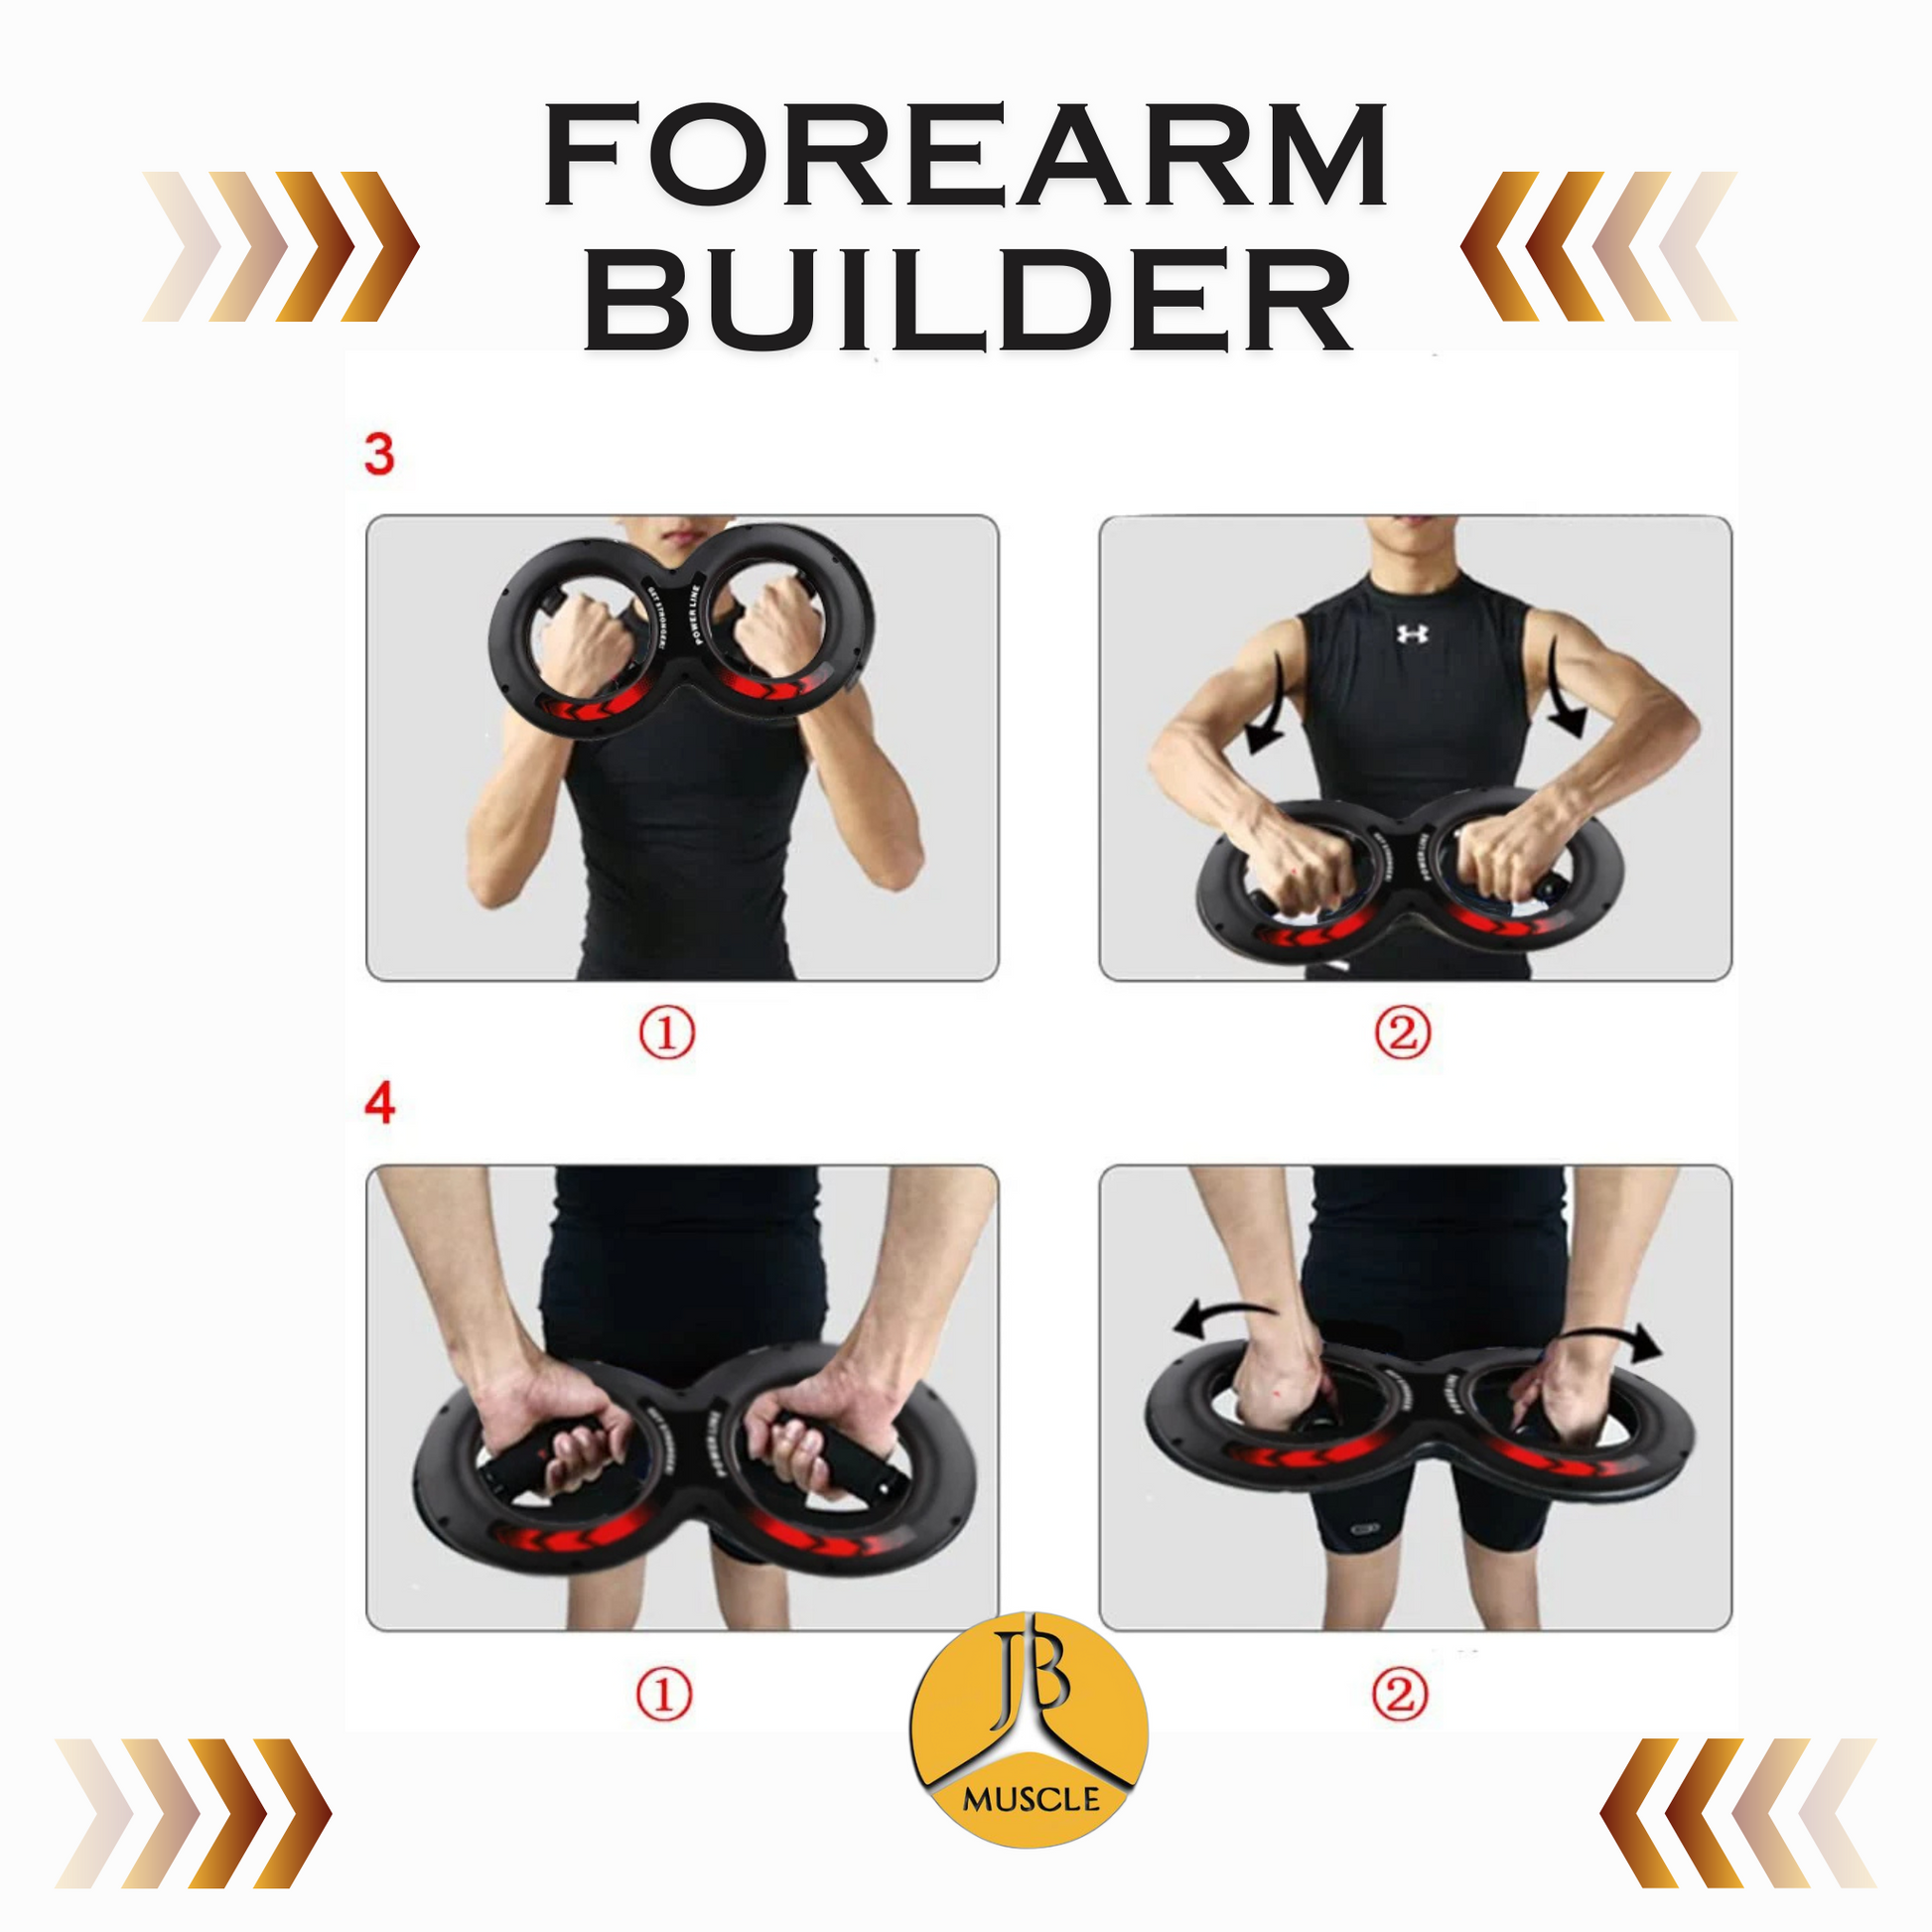 JB Muscle™ Forearm Trainer for building bicep developer.